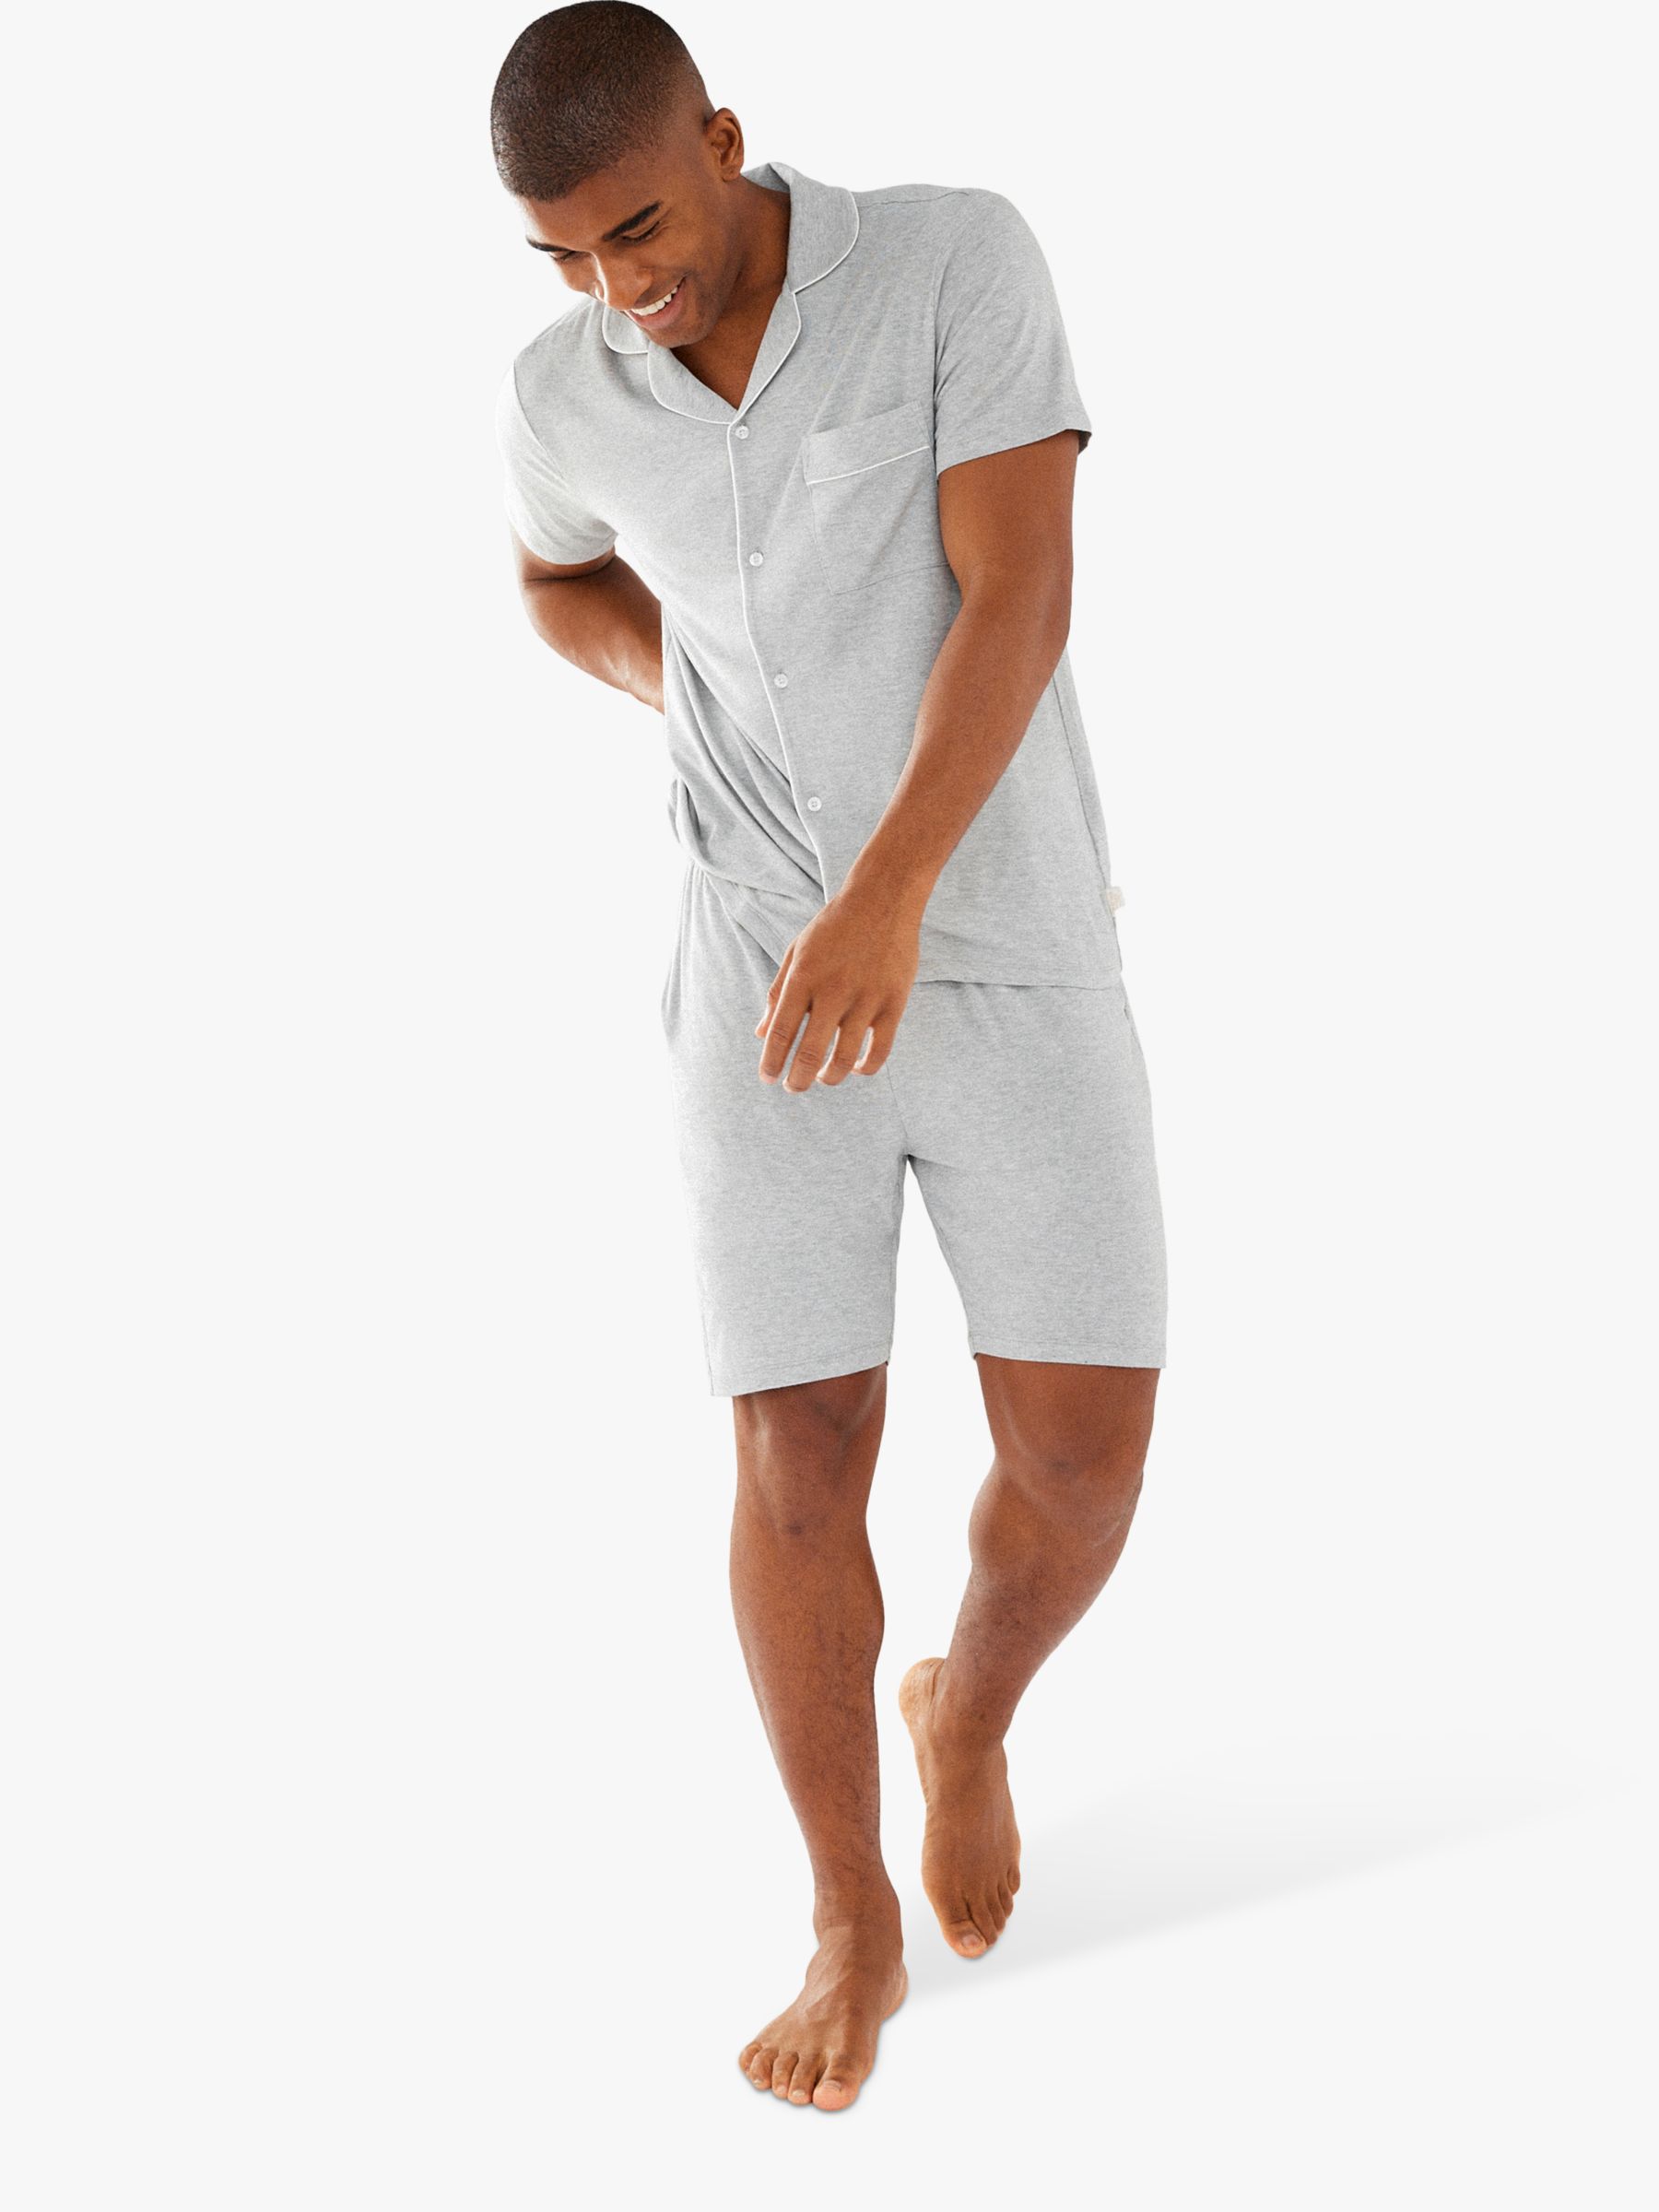 Buy Chelsea Peers Plain Piped Short Shirt Pyjama Set Online at johnlewis.com